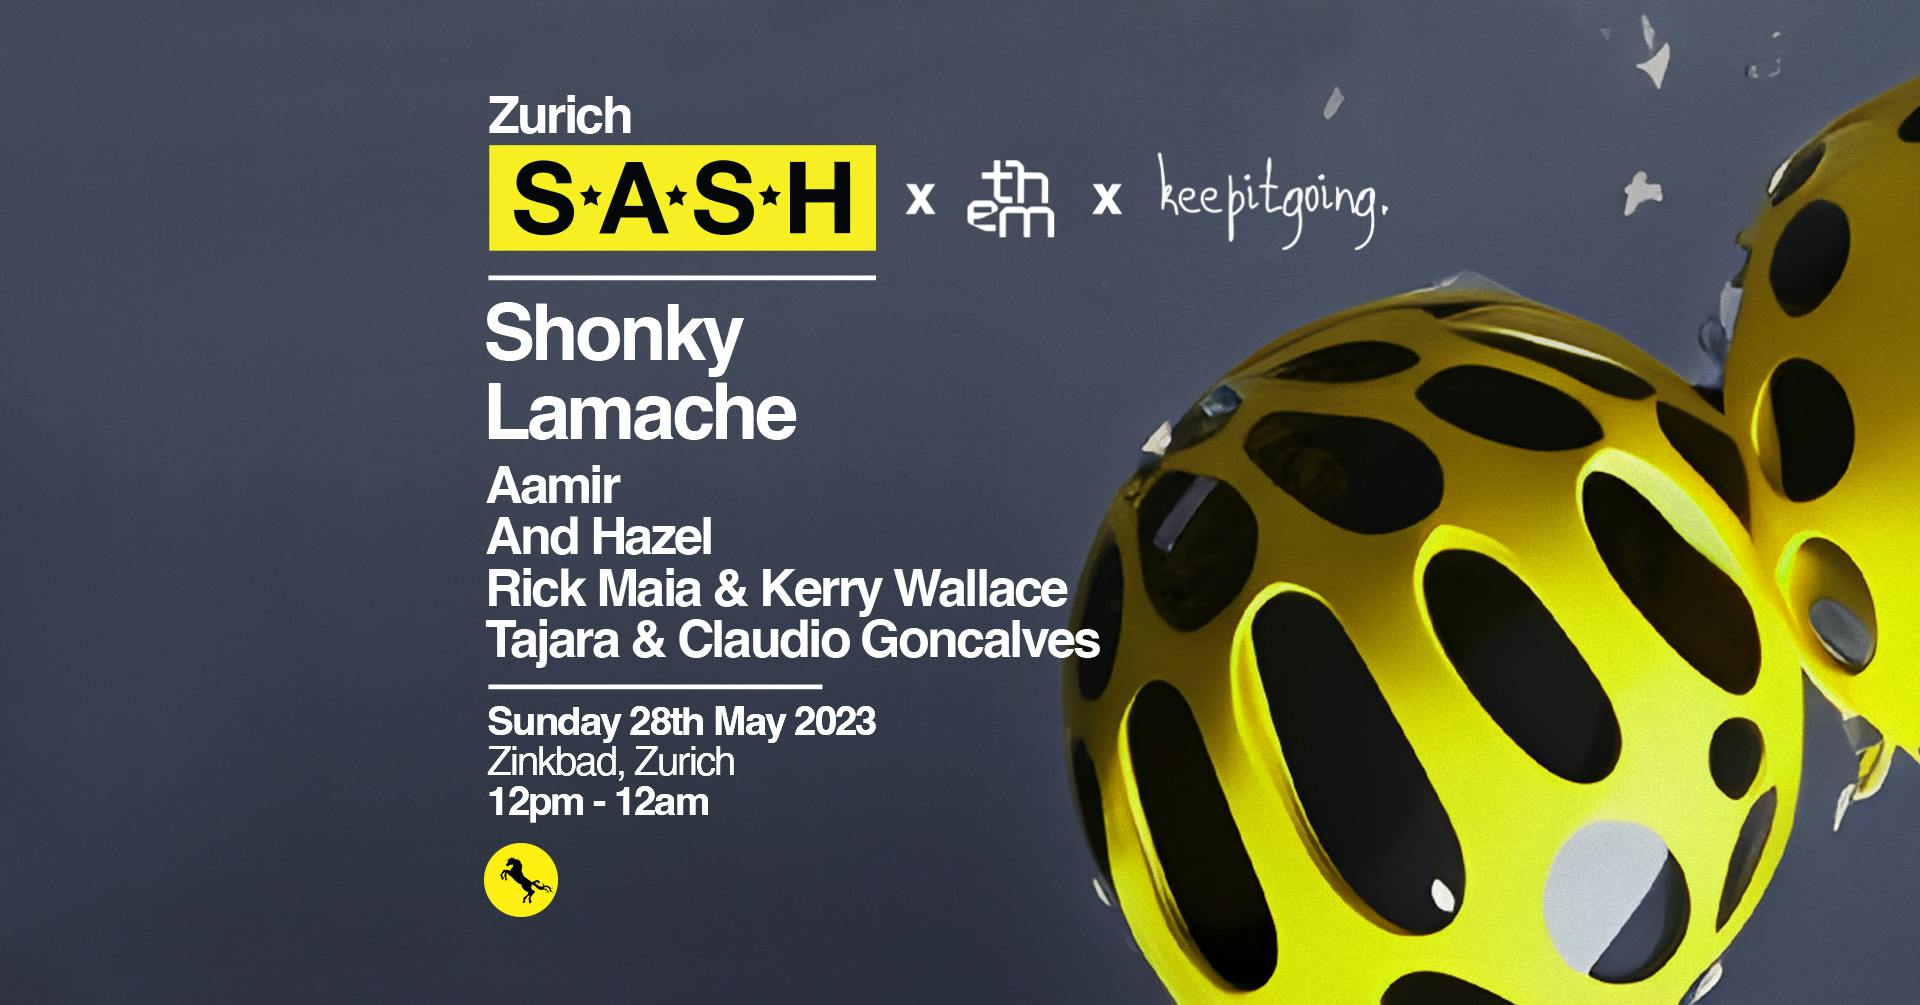 ★ S.A.S.H x Keepitgoing x THEM ★ Shonky ★ Lamache ★ Sunday 28th May ★ Zürich ★